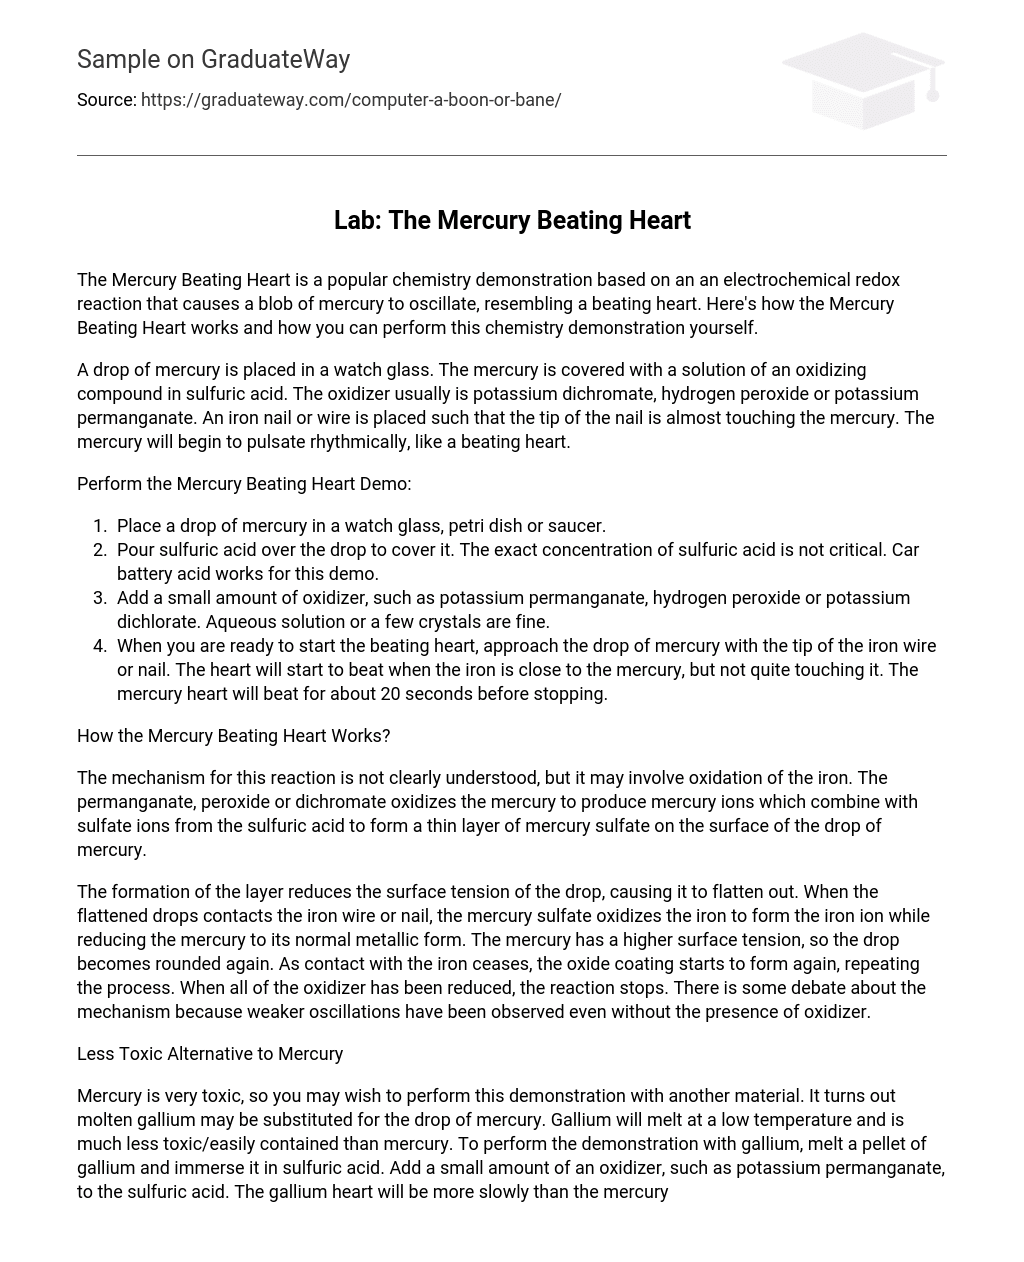 Lab: The Mercury Beating Heart